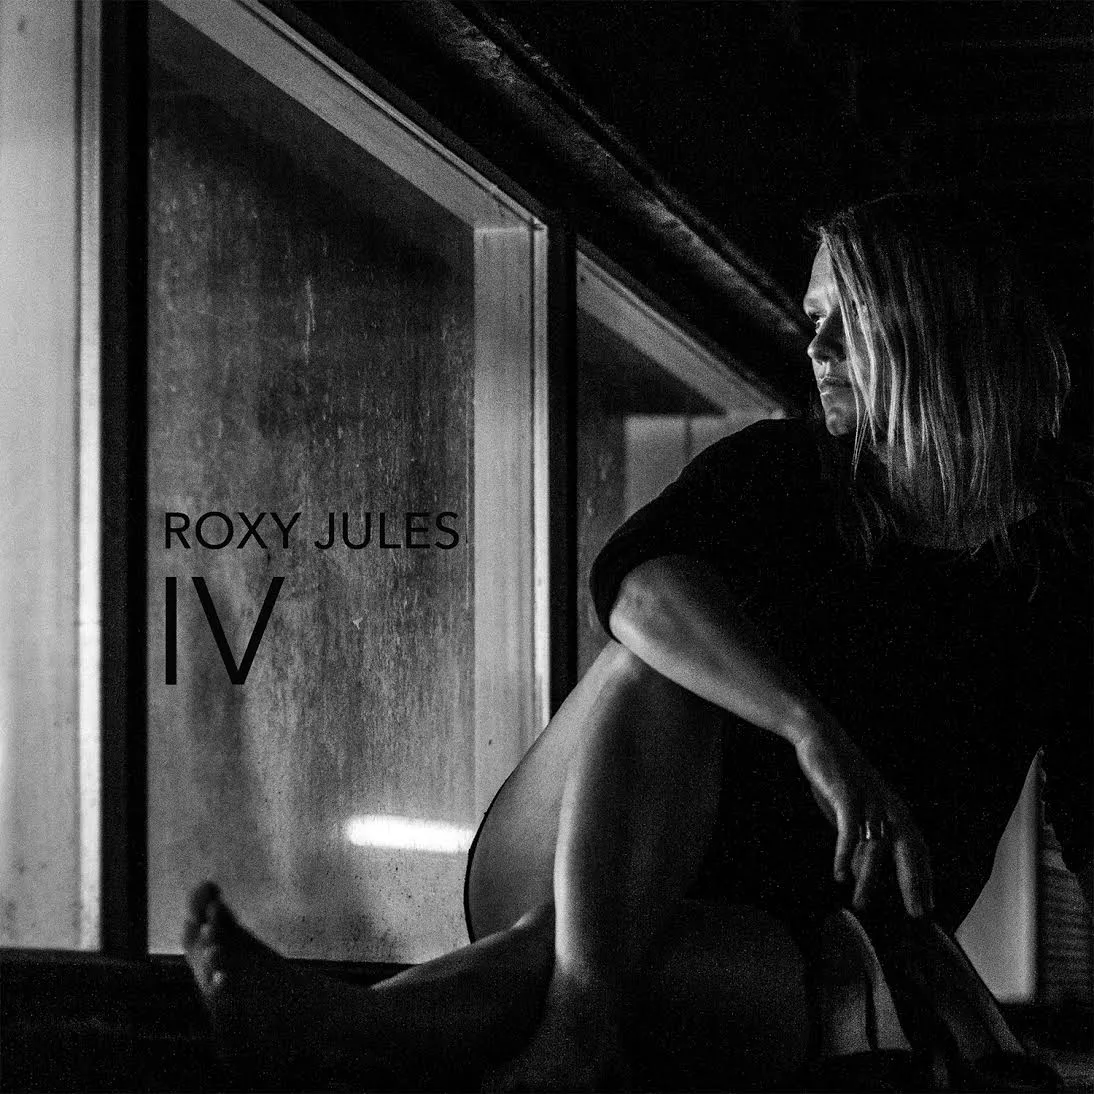 Roxy Jules IV - Roxy Jules